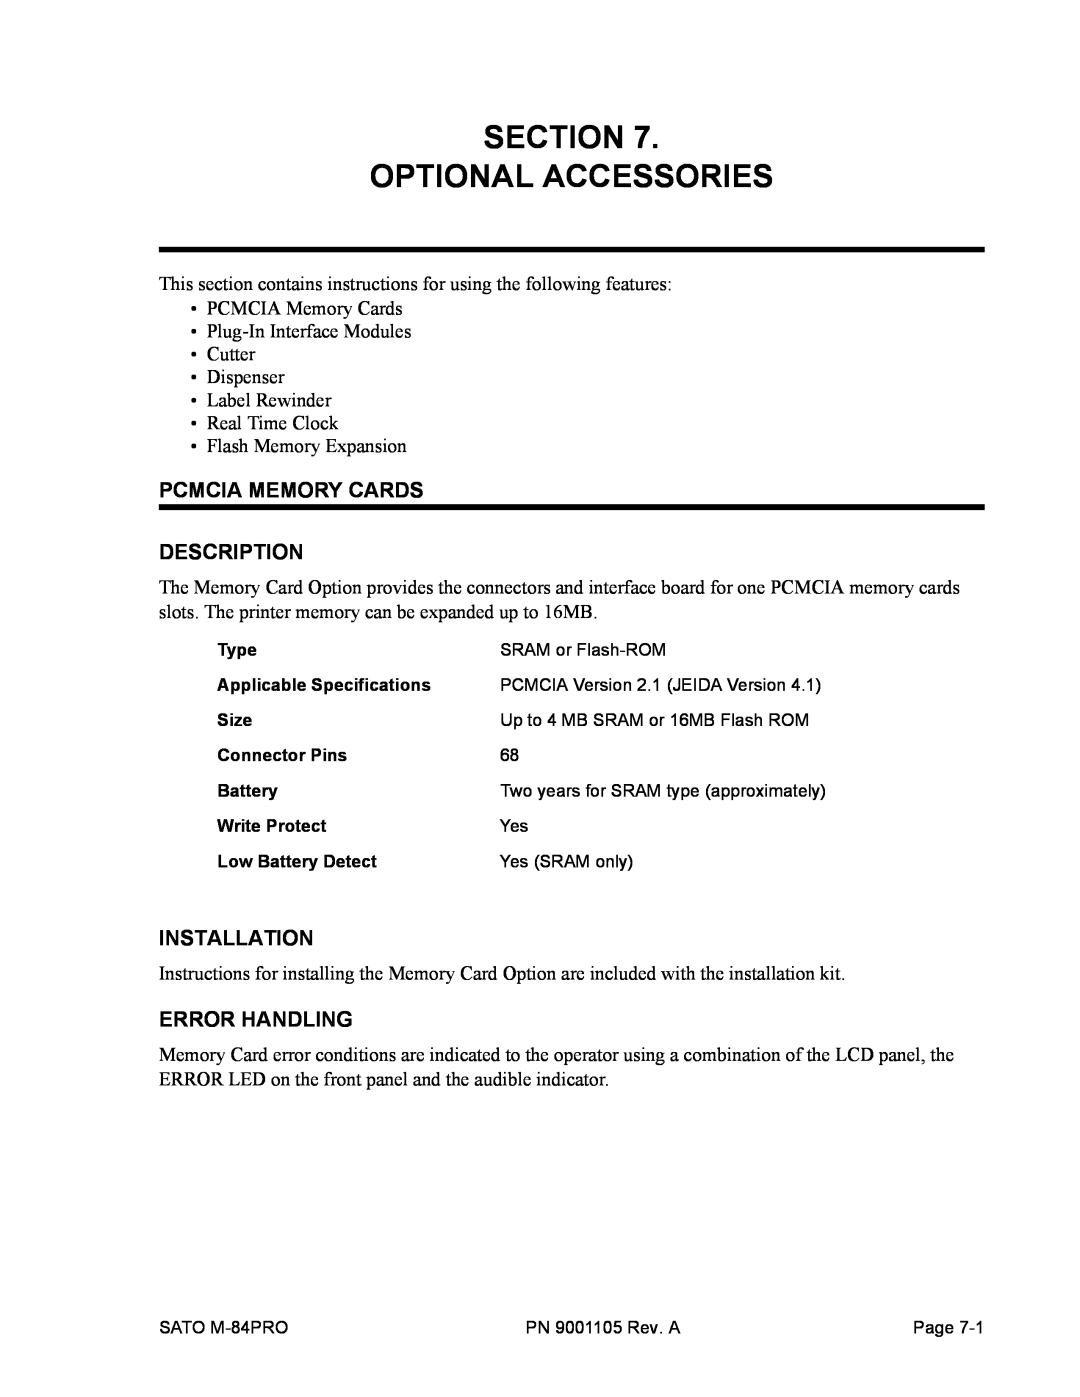 SATO M-84PRO manual Section Optional Accessories, Pcmcia Memory Cards Description, Installation, Error Handling 